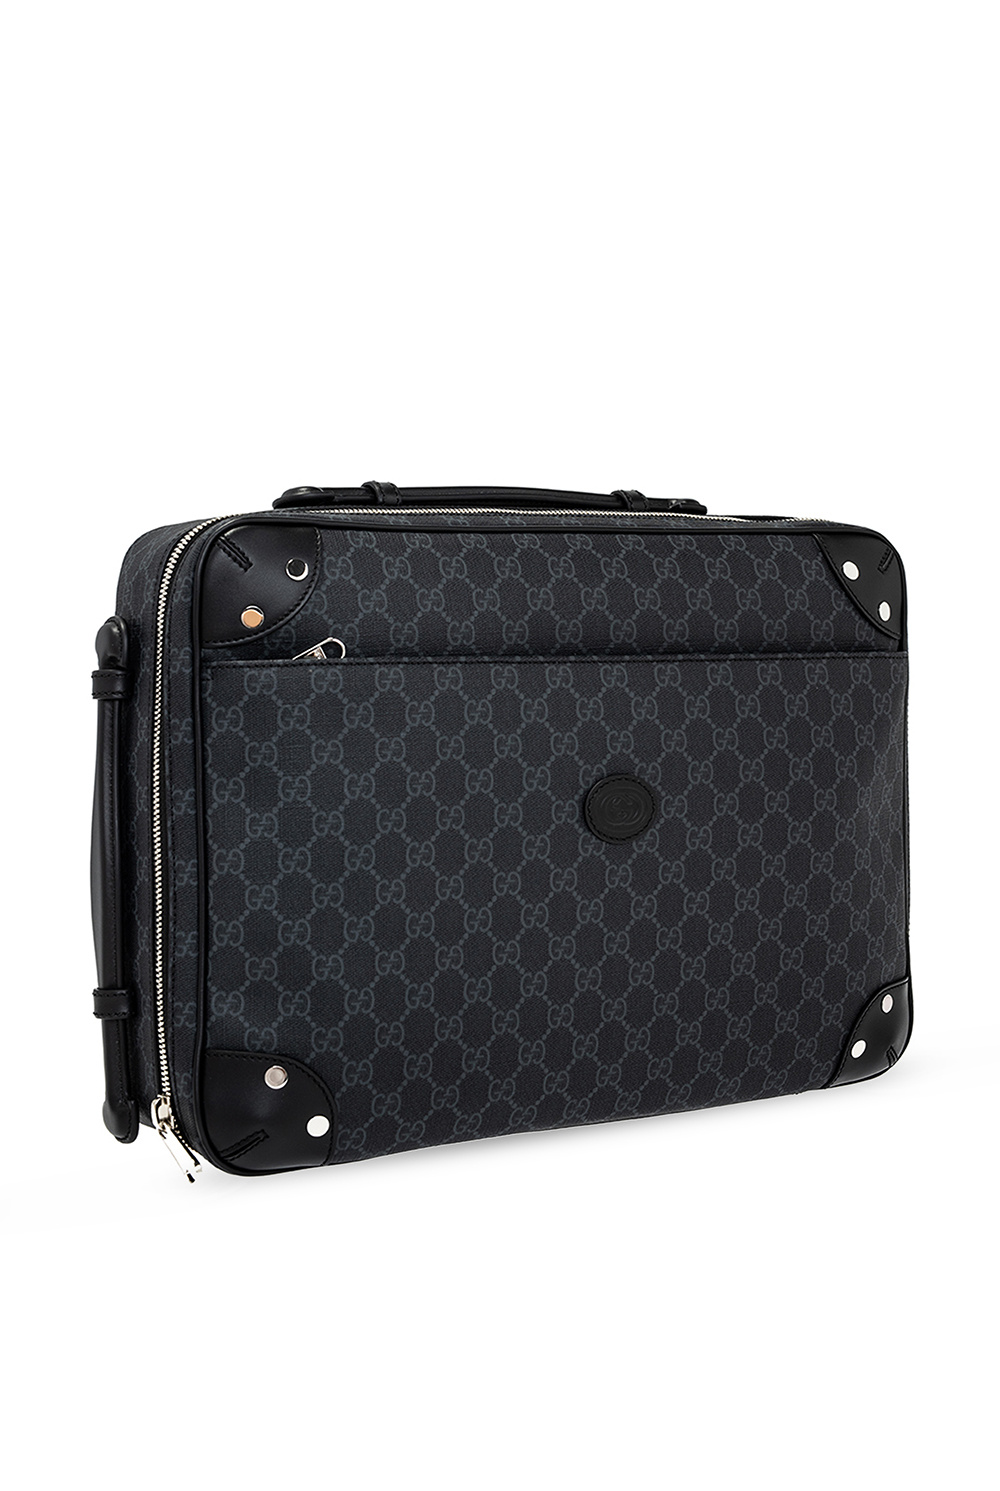 Gucci Briefcase with logo